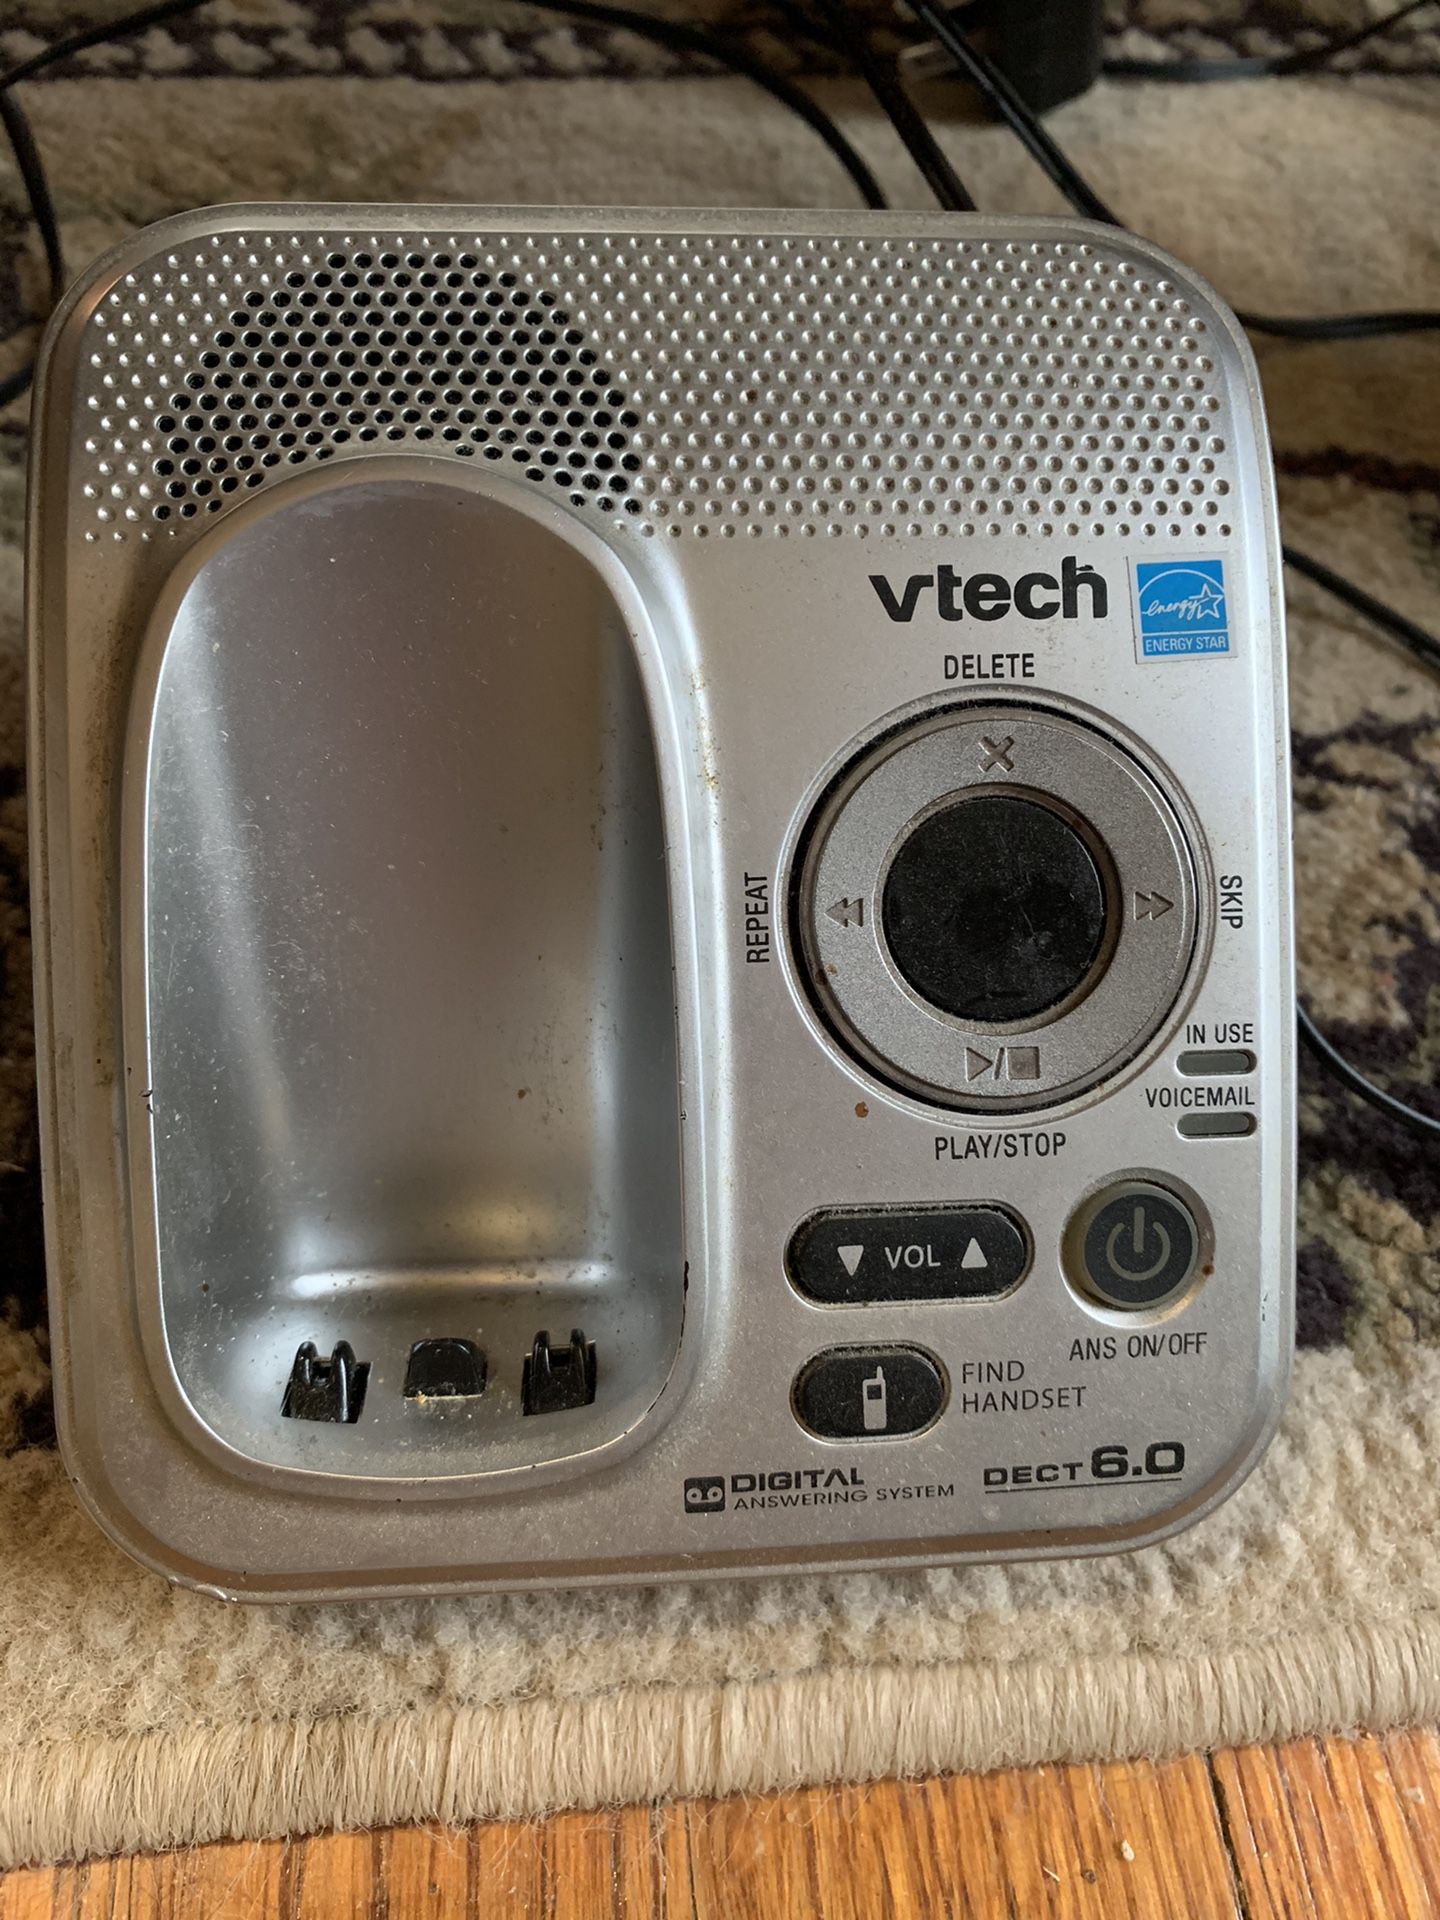 VTech cordless three phone system